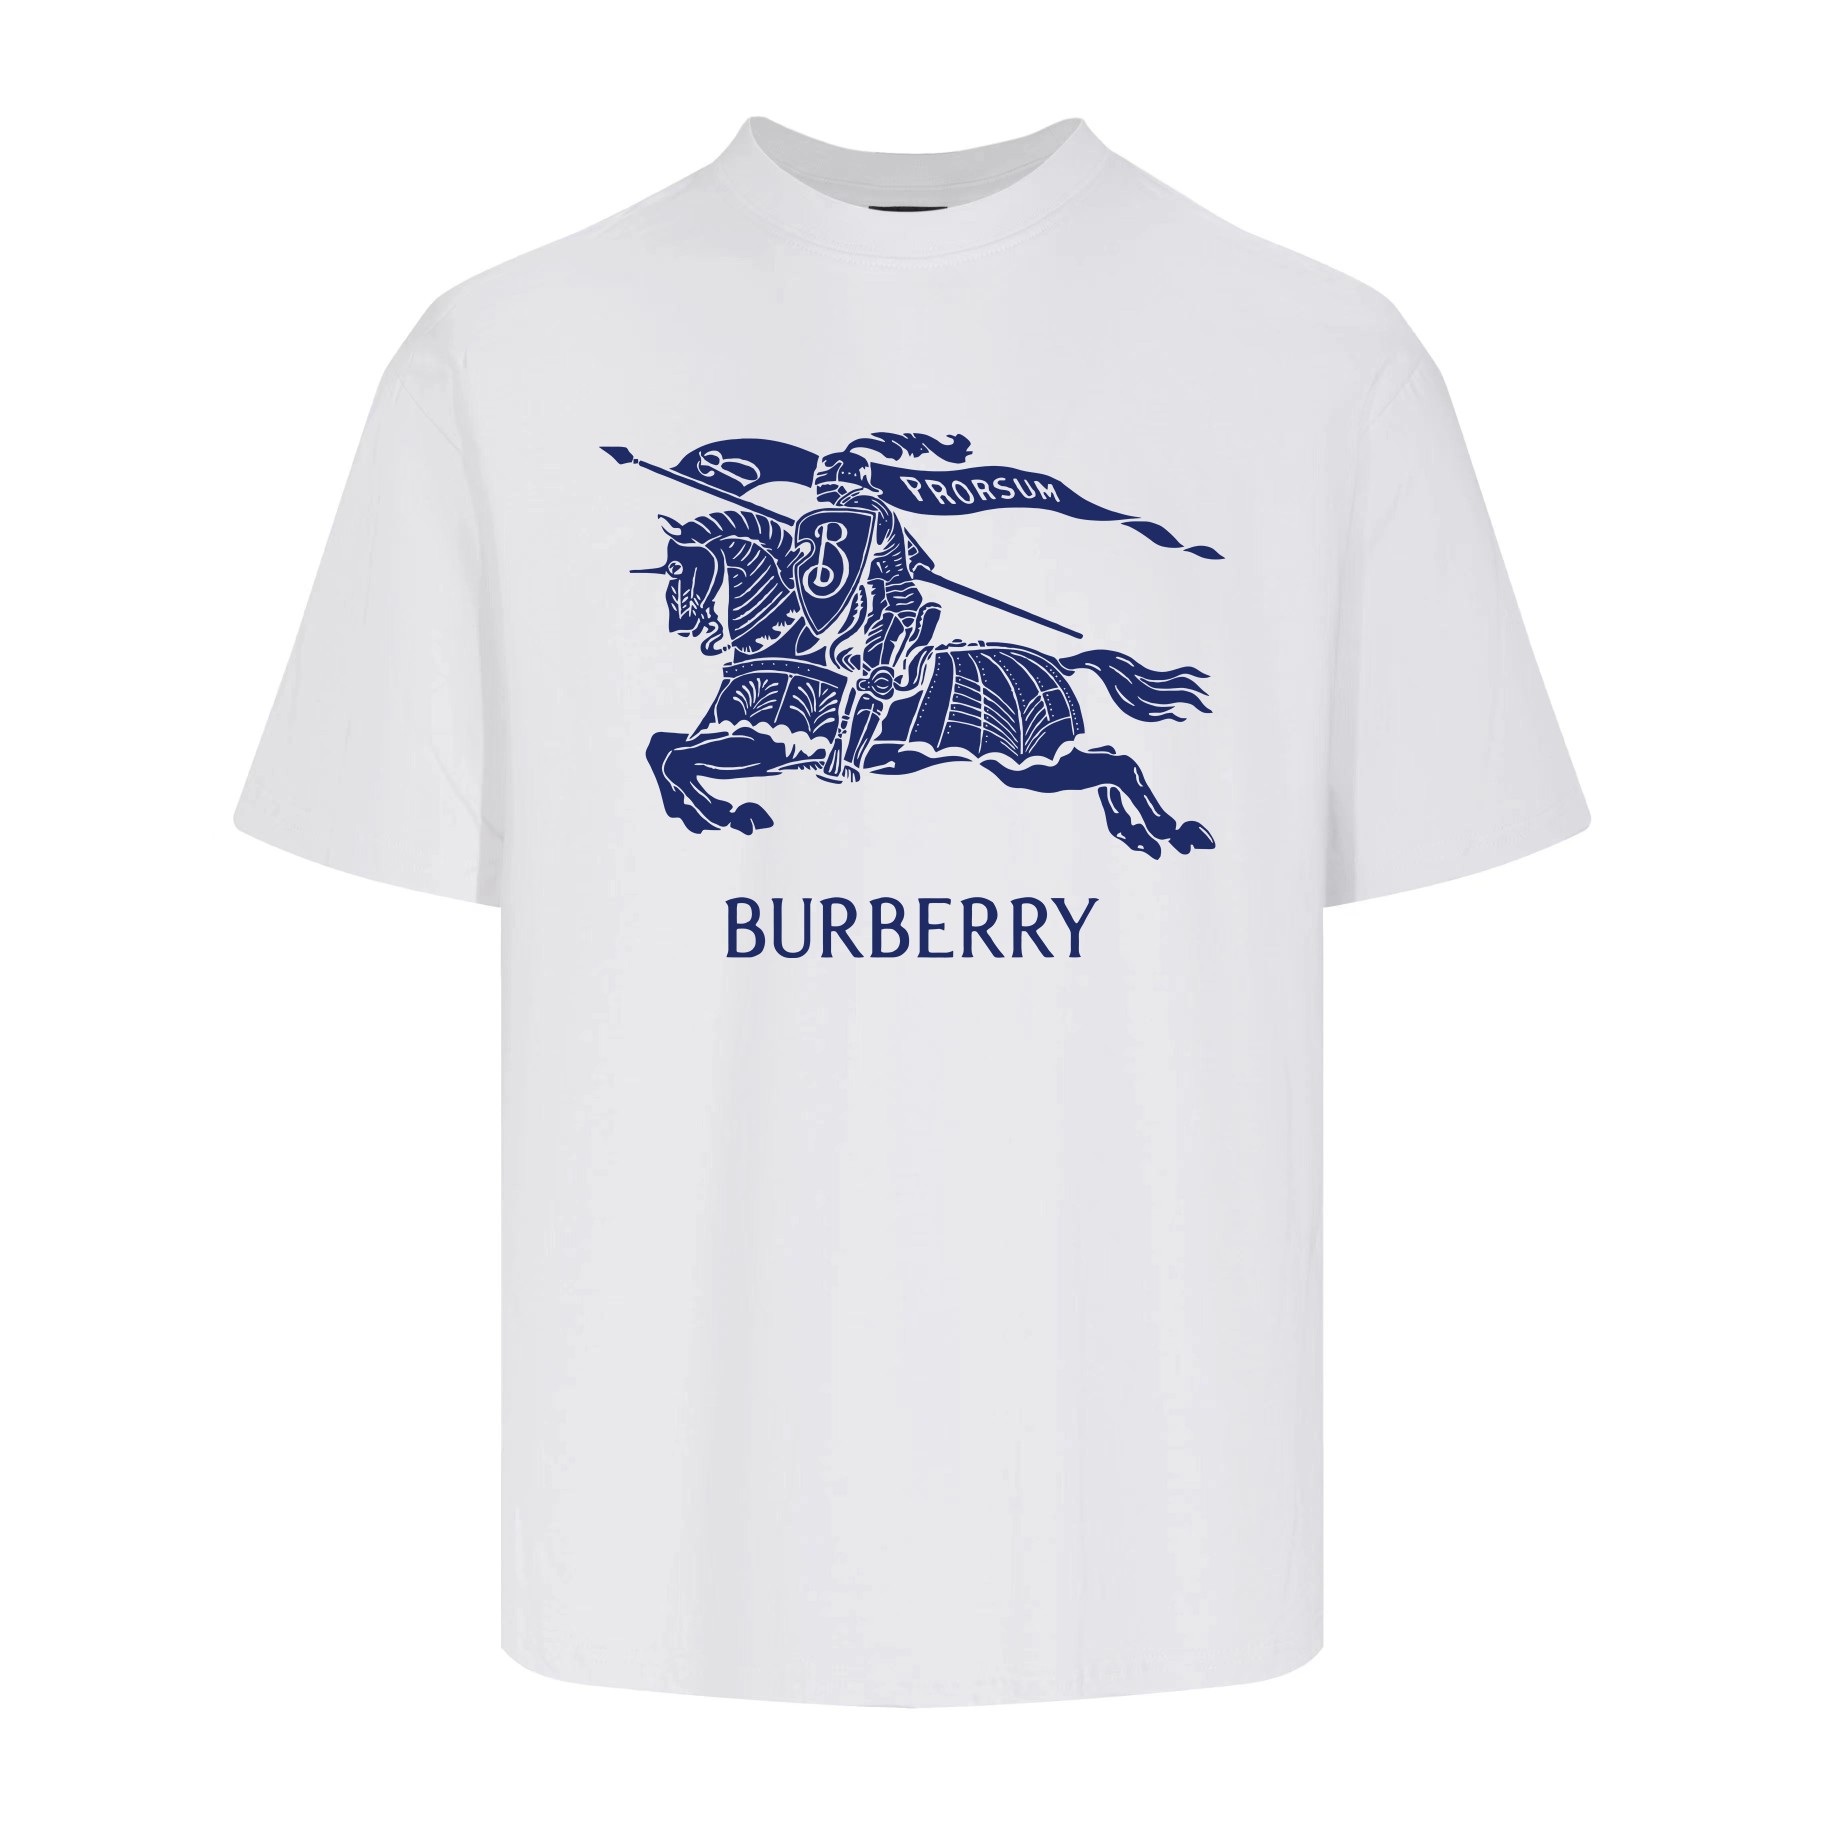 burberry t シャツスーパーコピー 純綿 ファッション 半袖 夏 おしゃれ 透けない 男女兼用 2色可選 ホワイト_1